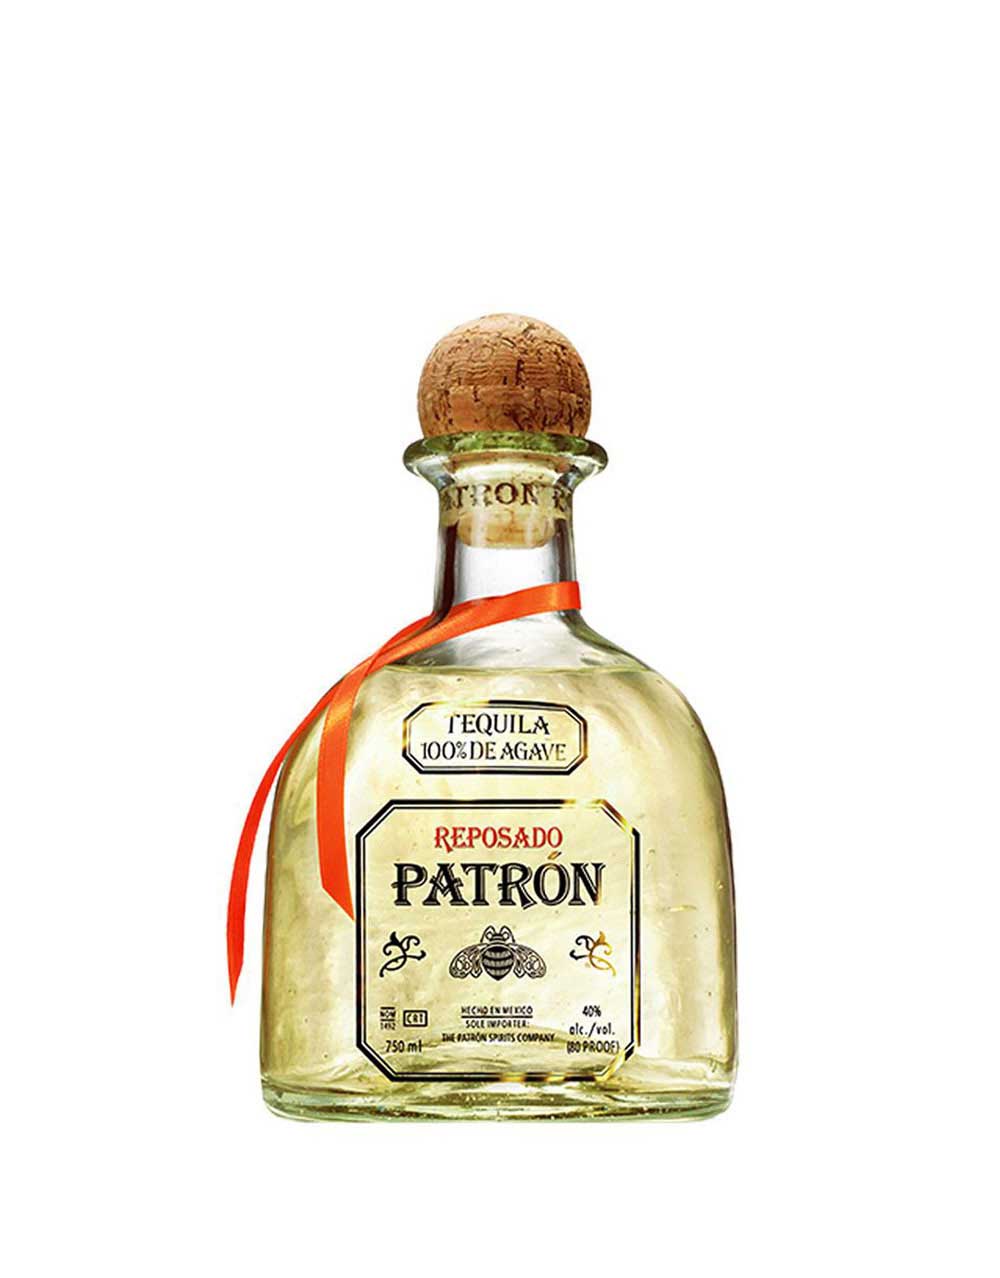 Jose Cuervo Tradicional Reposado Day of the Dead Limited Edition Tequila